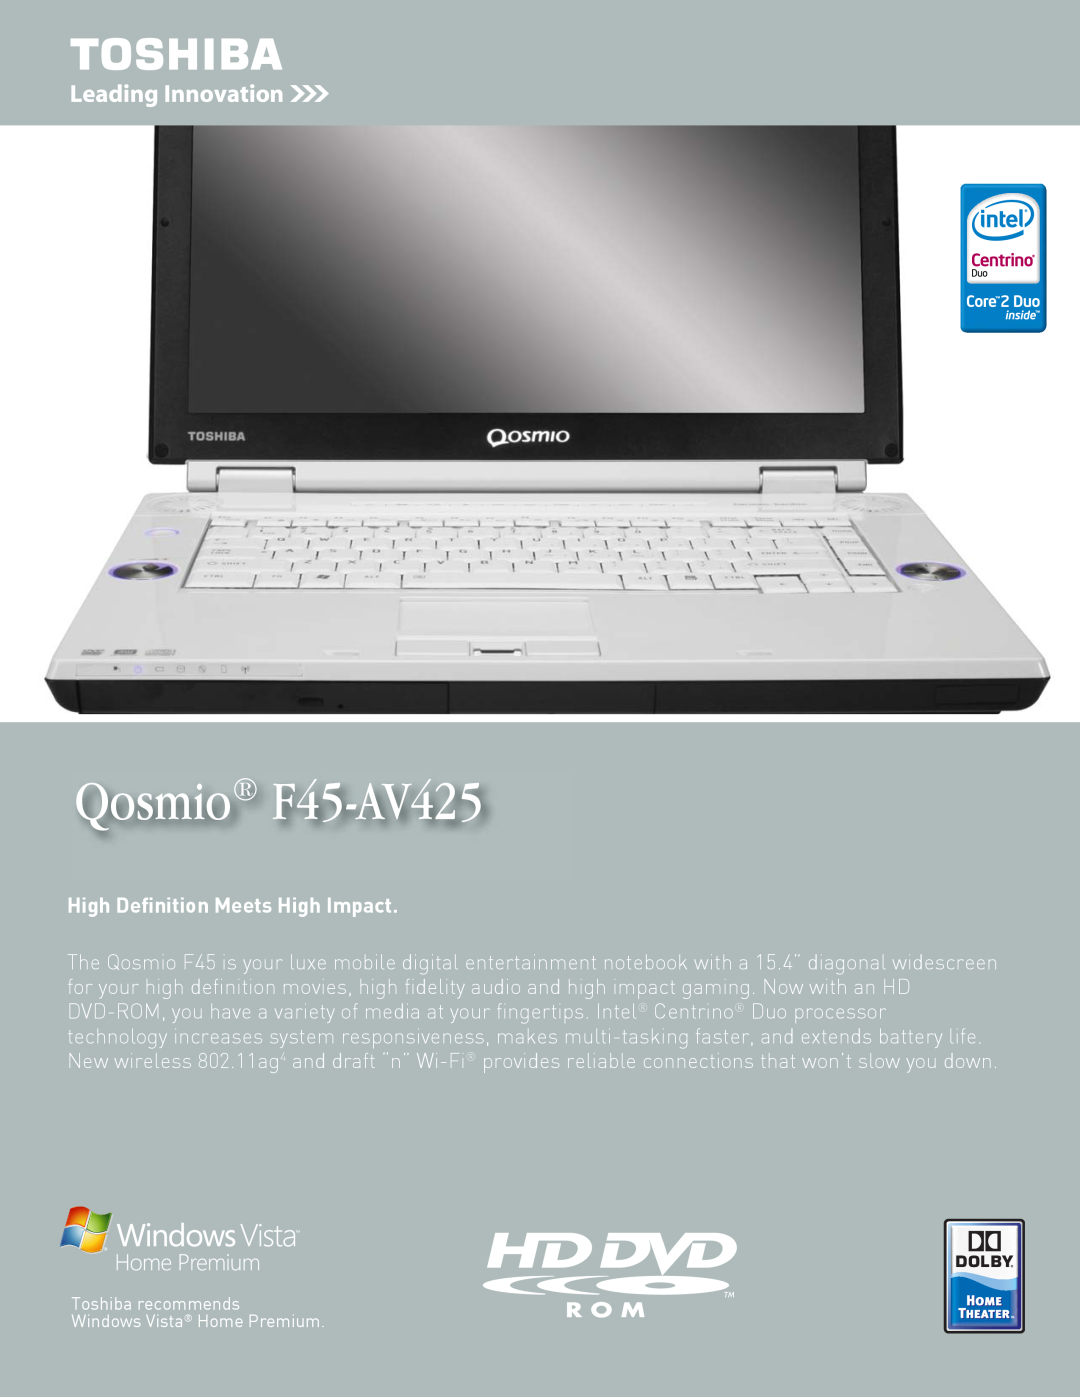 Toshiba manual Qosmio F45-AV425, High Deﬁnition Meets High Impact 